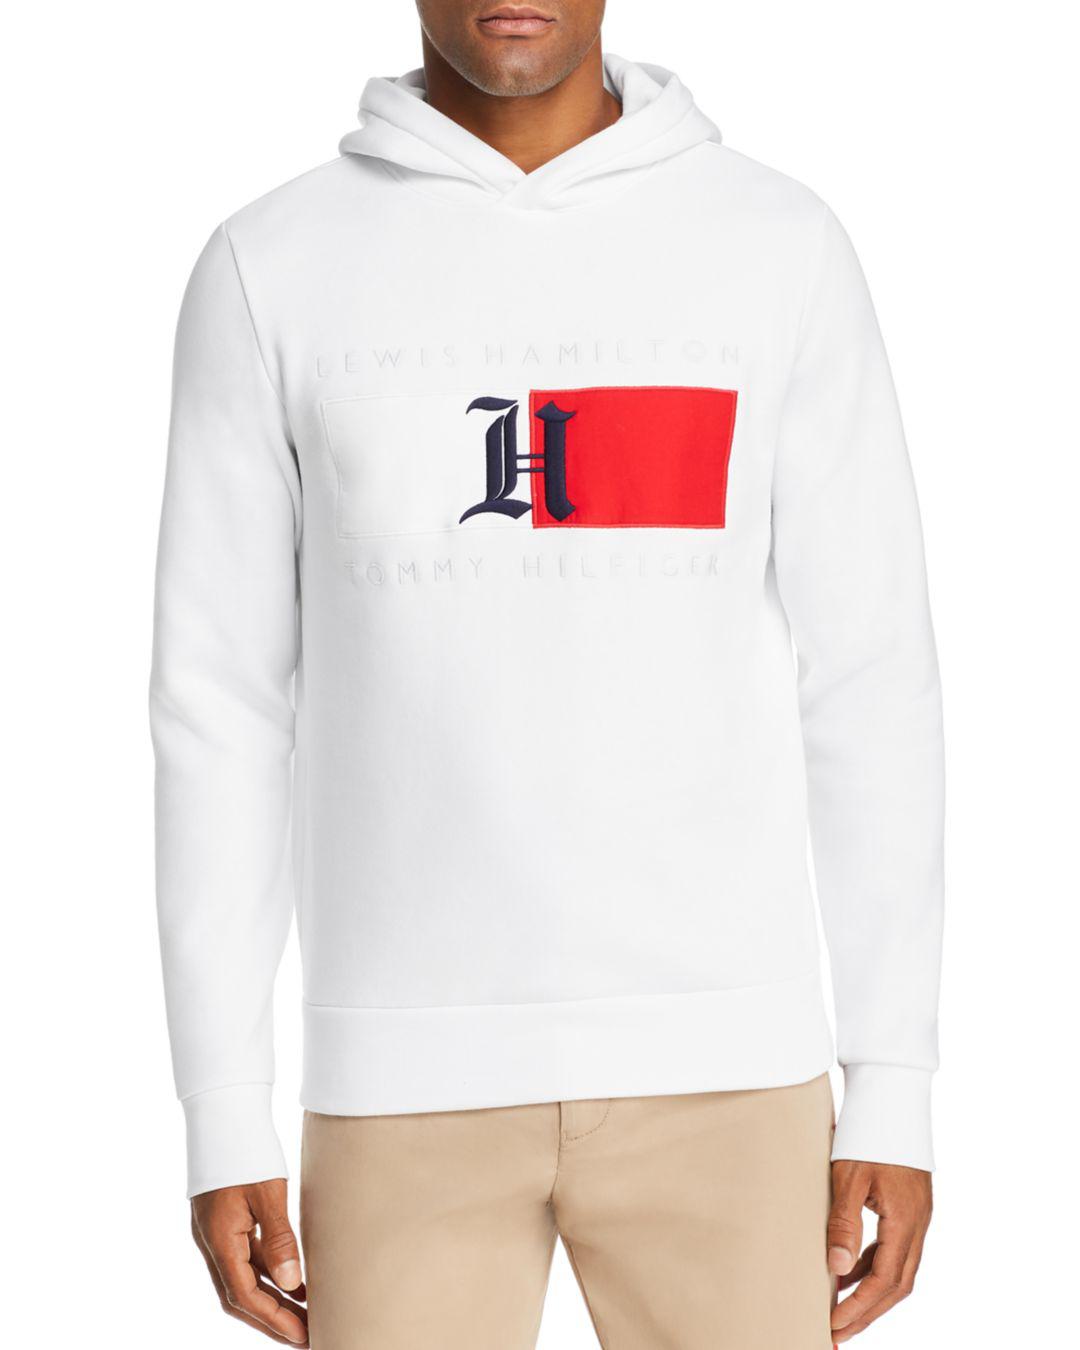 Tommy Hilfiger White Sweatshirt, Buy Now, Store, 52% OFF, sportsregras.com